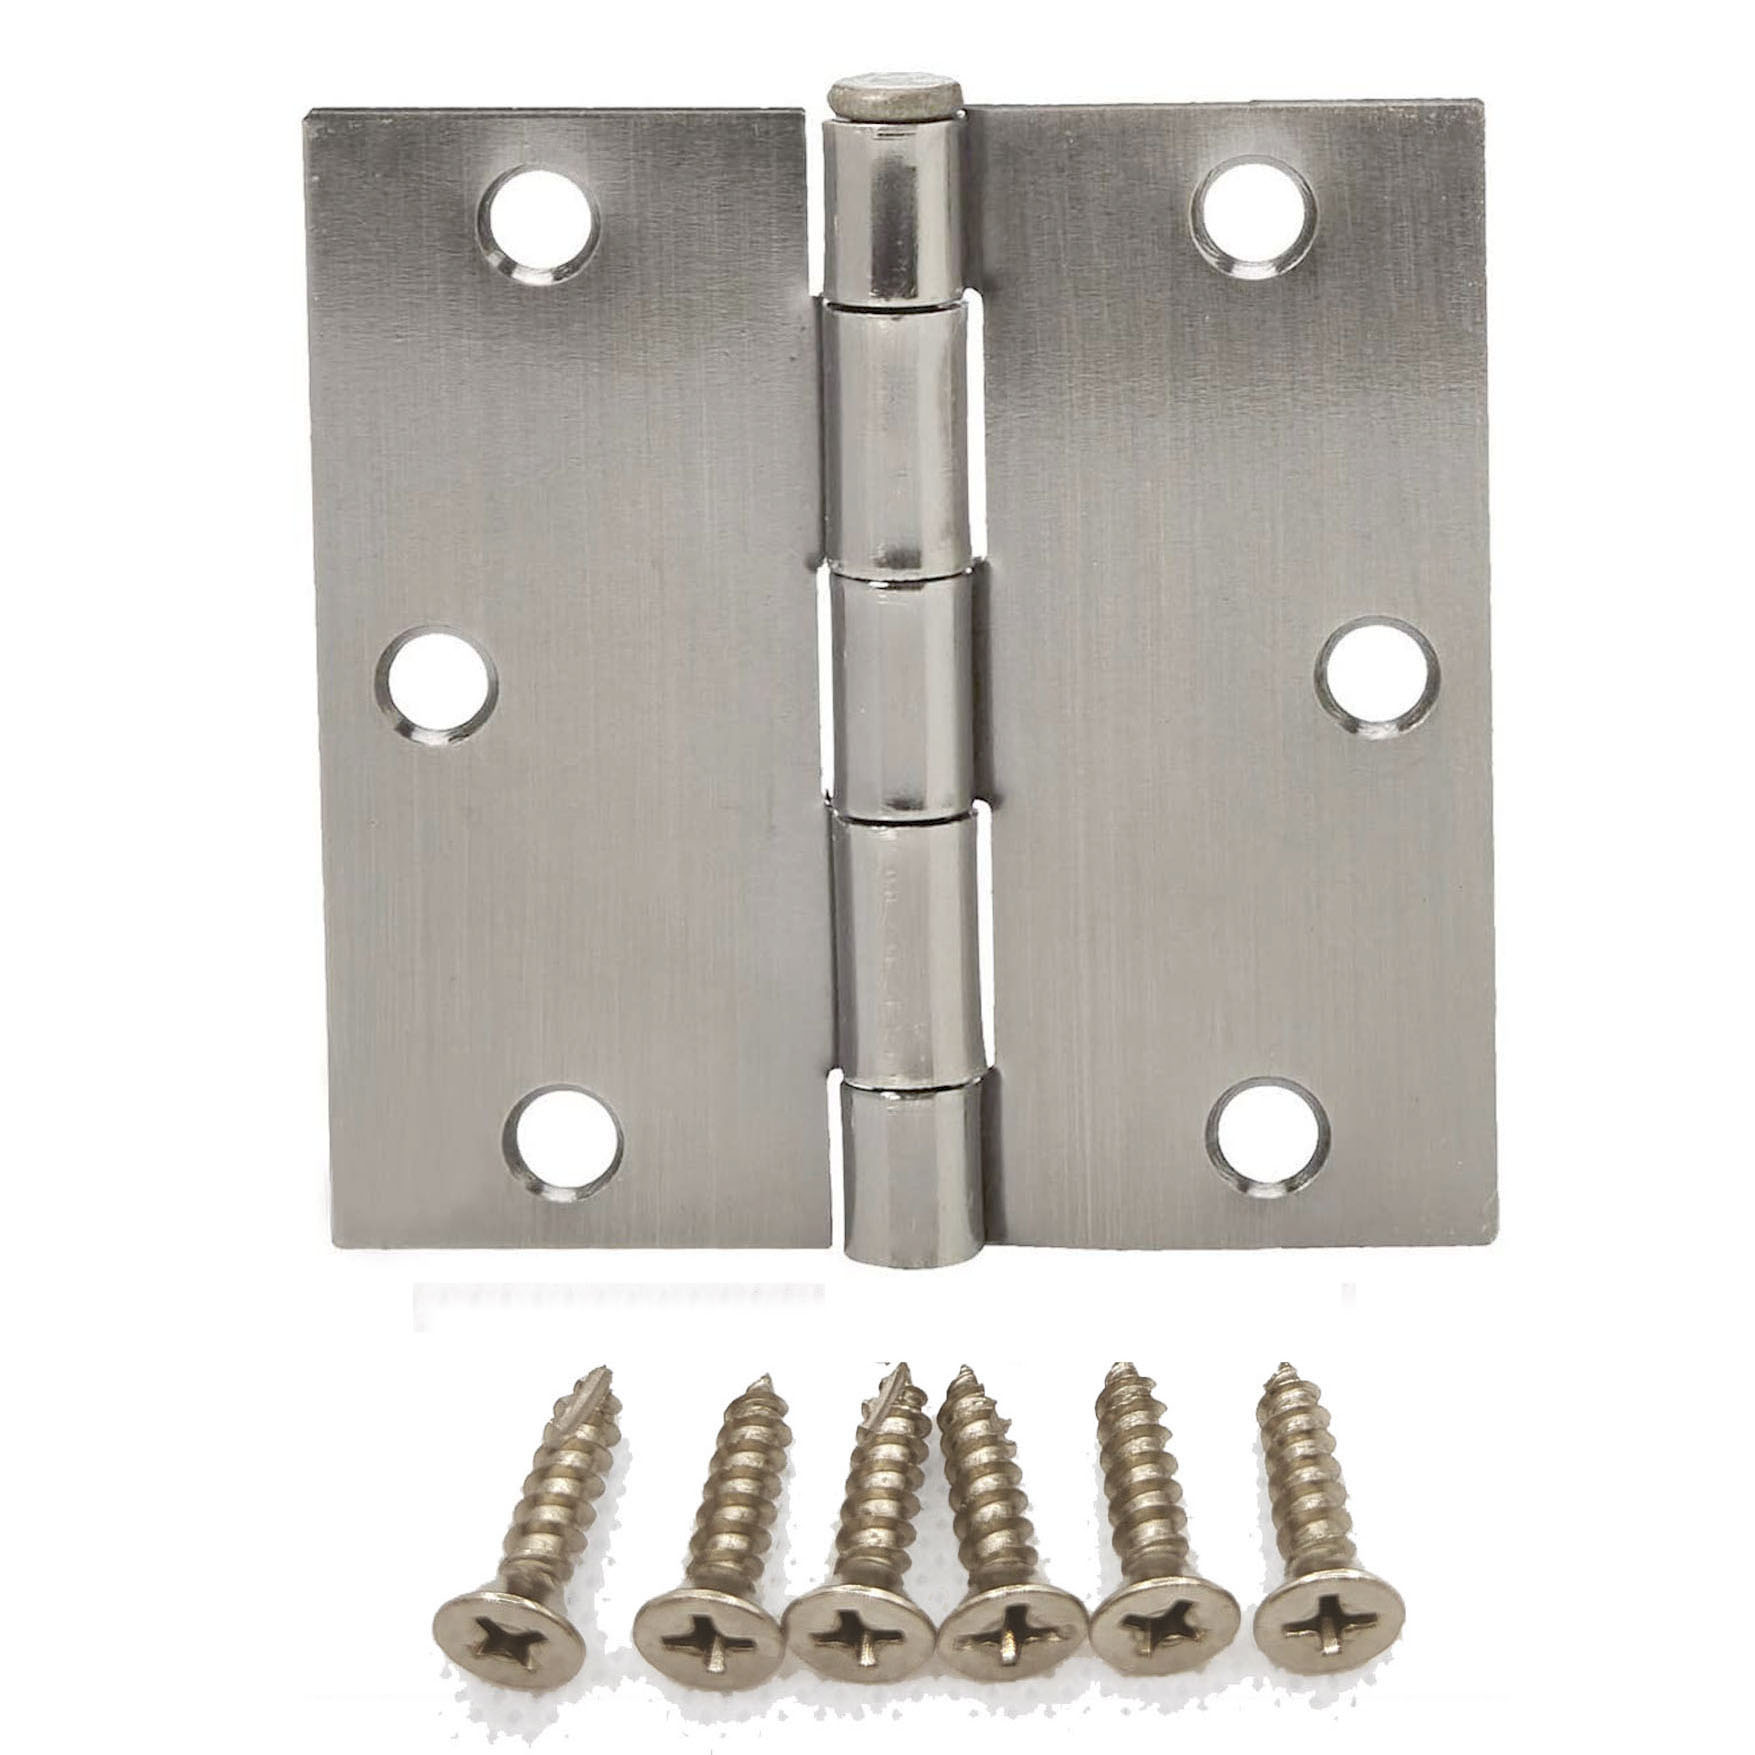 50pair(100pcs)Steel door hinge 3-1/2"Square corner,satin nickel,removable pin, door hinge,mobile home door hinge  and cabinet hinge,with screws - image 1 of 6